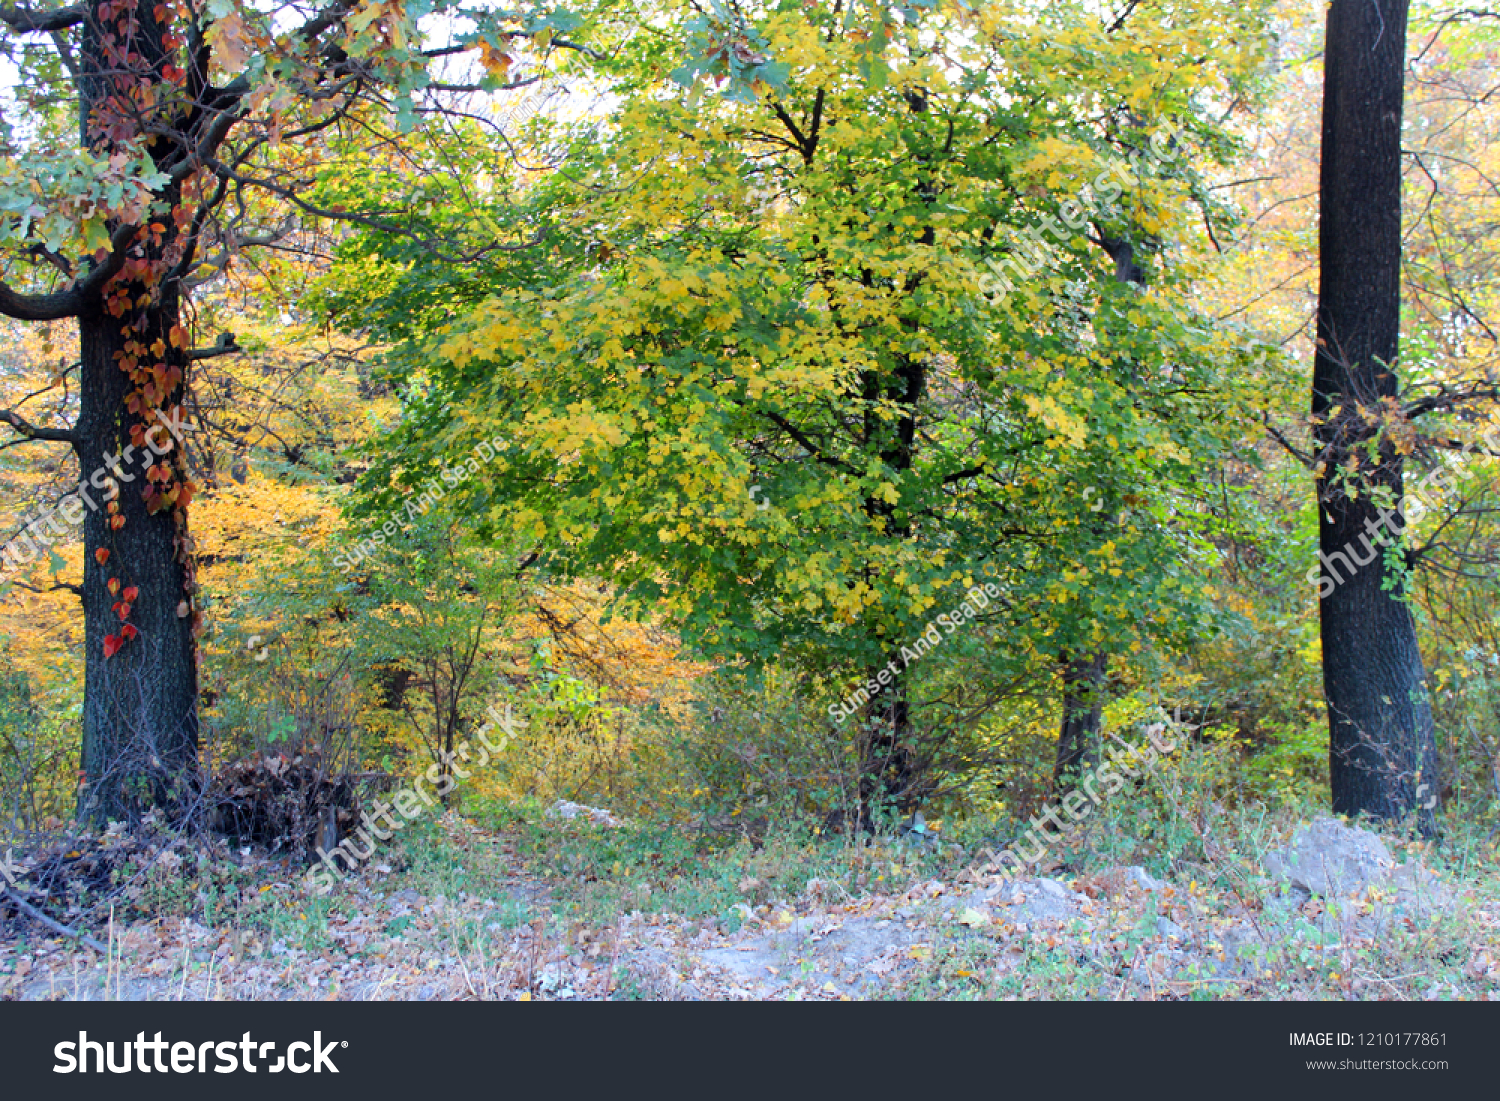 Beautiful autumn landscape with colorful trees. Nature background. Autumn season #1210177861